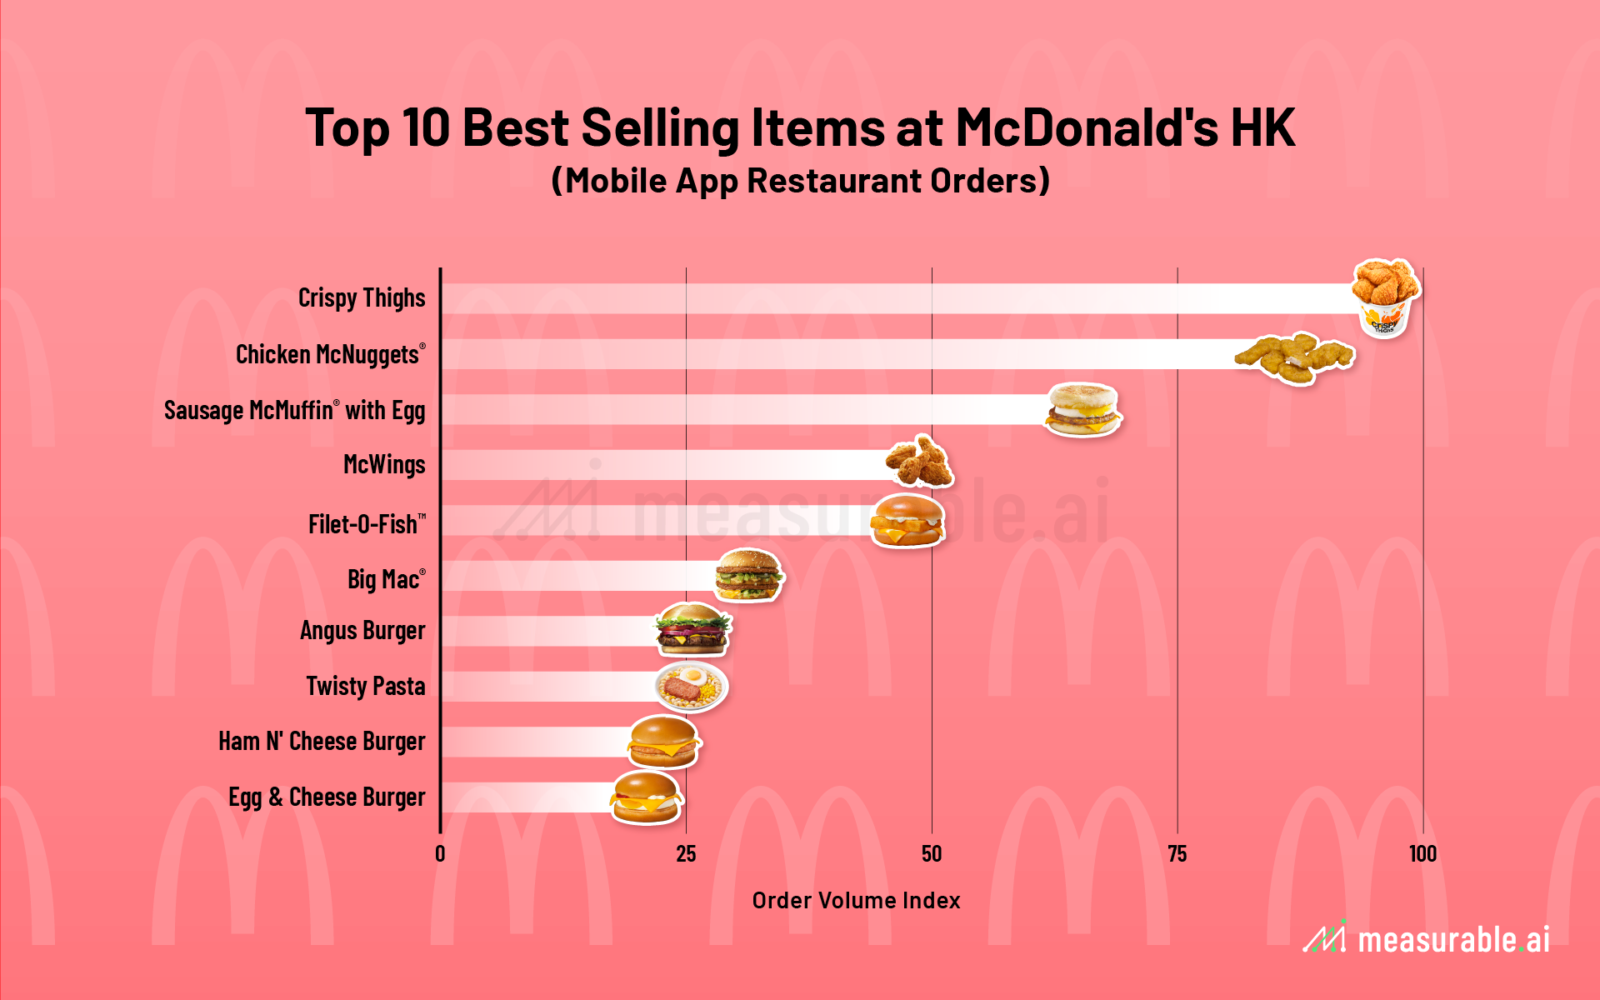 Top 10 Best Selling Items at McDonald's HK